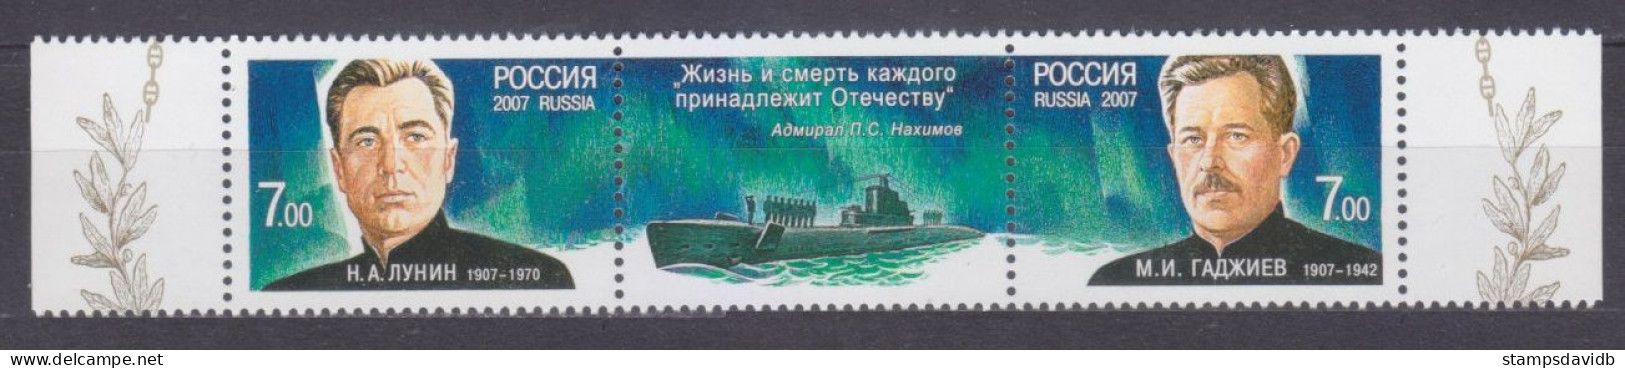 2007 Russia 1419-1420strip Submariner Heroes N. A. Lunin M. I. Gadzhiev 4,00 € - Sous-marins